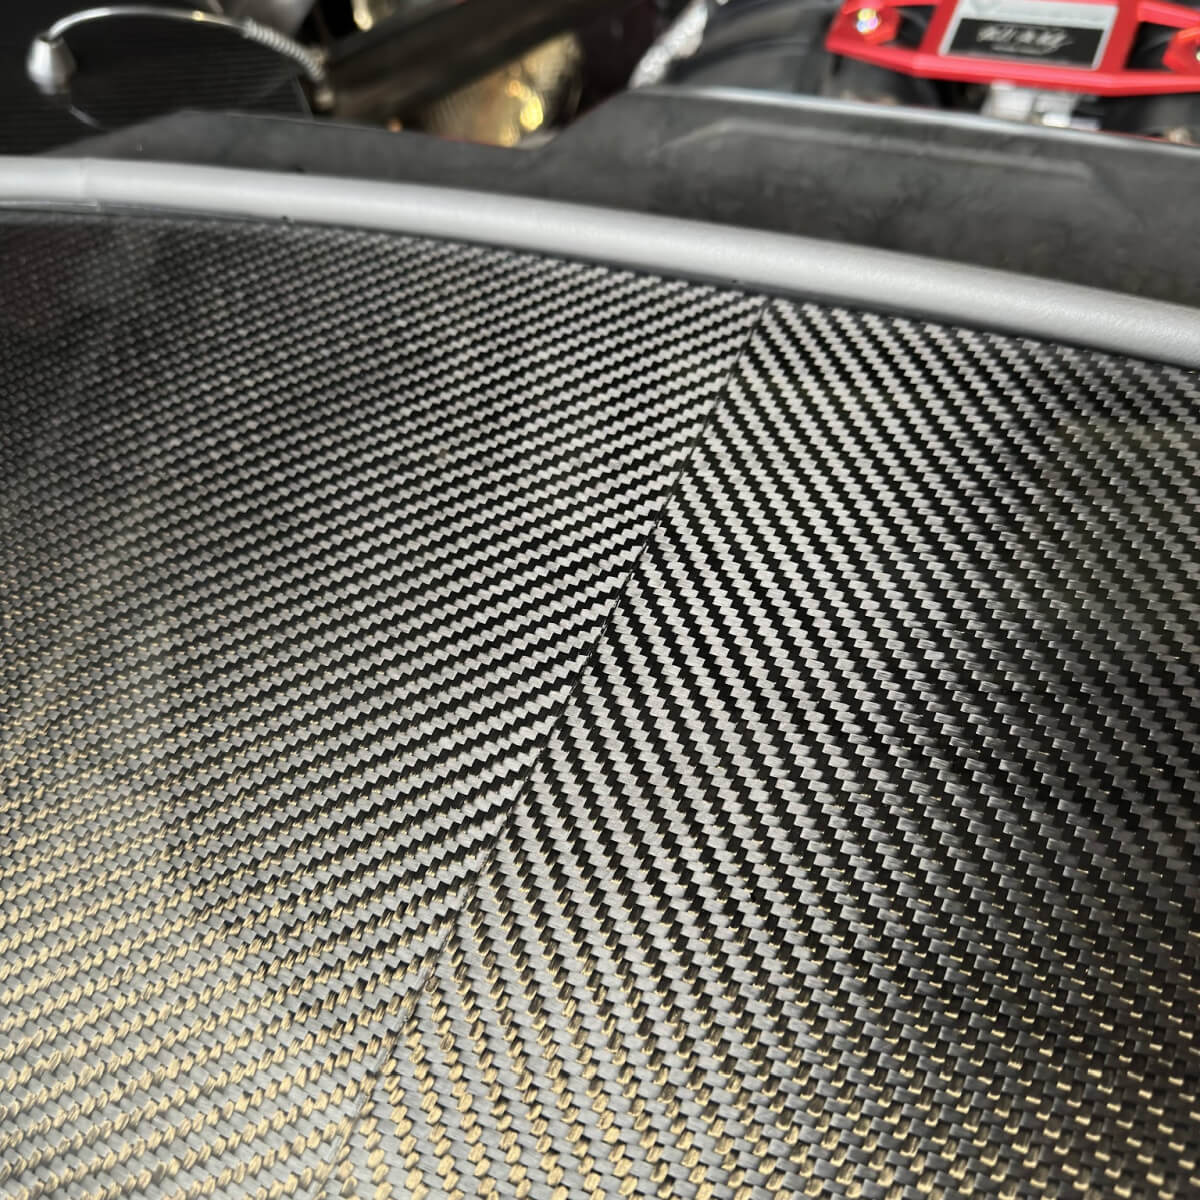 C8 Corvette Carbon Fiber Trunk Cover